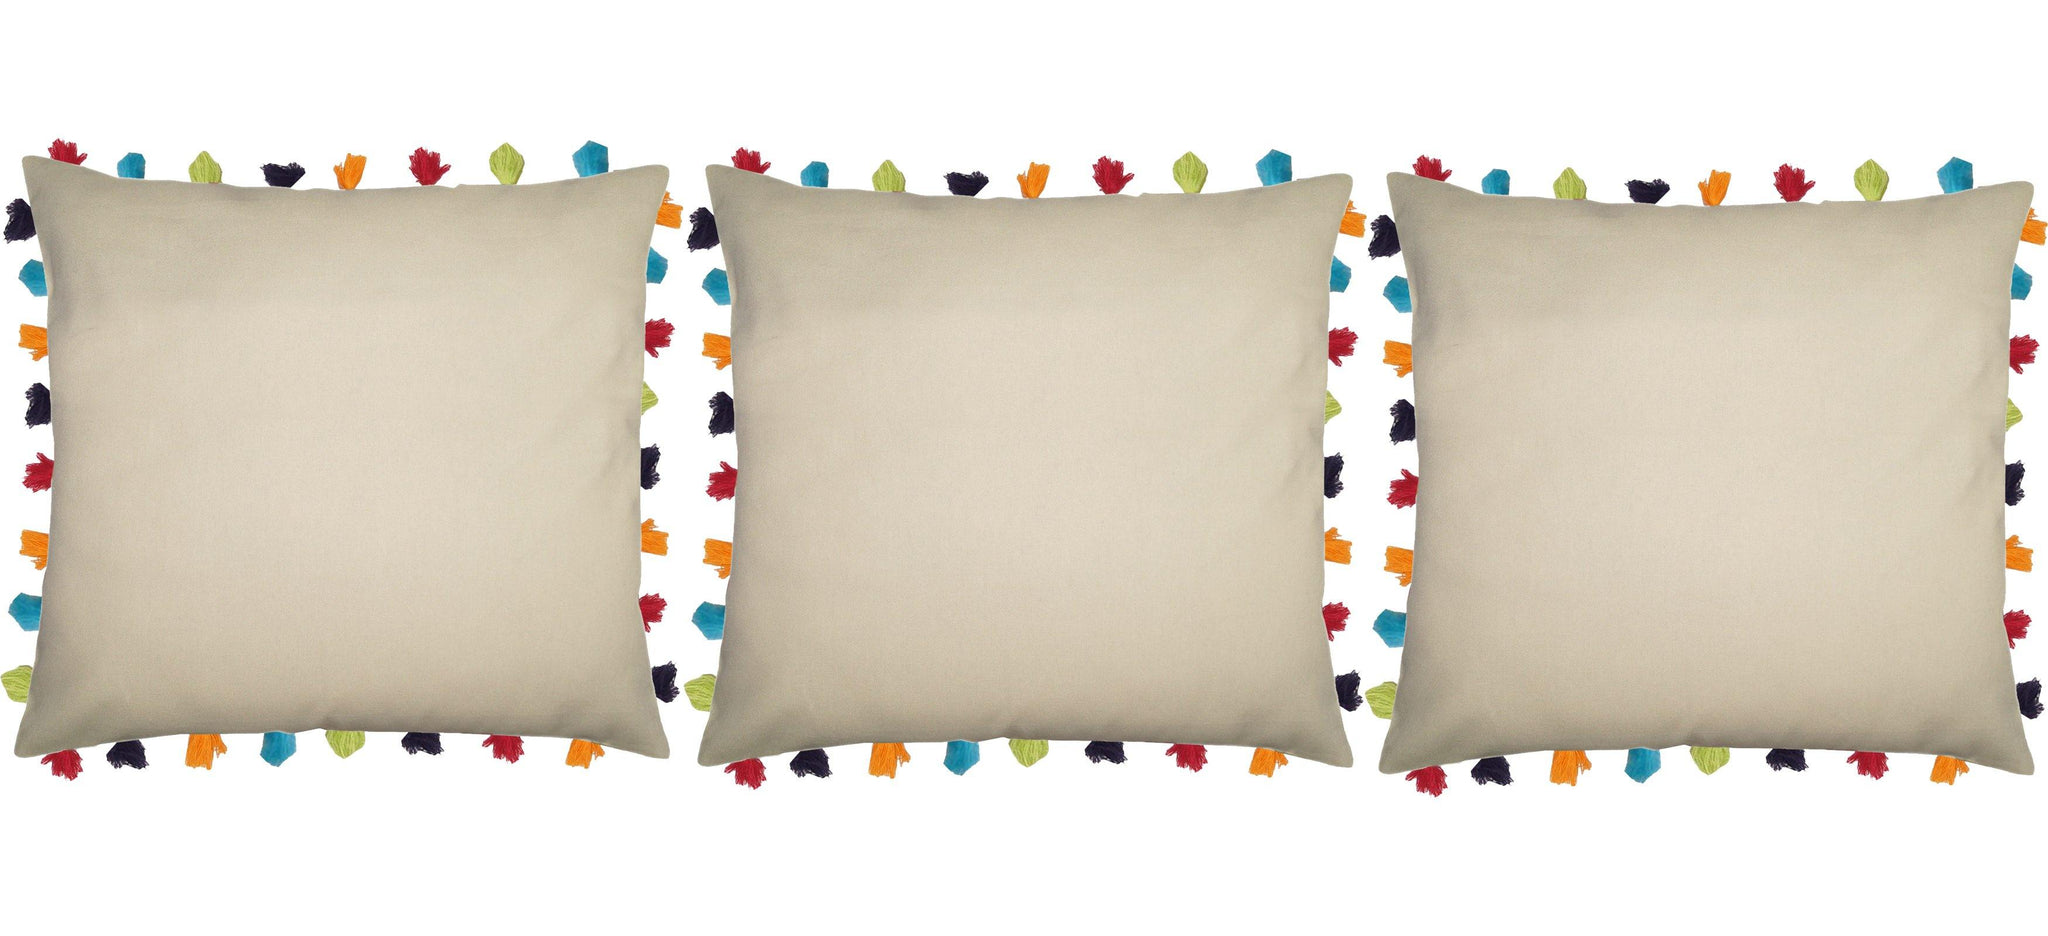 Lushomes Ecru Cushion Cover with Colorful tassels (3 pcs, 24 x 24”) - Lushomes